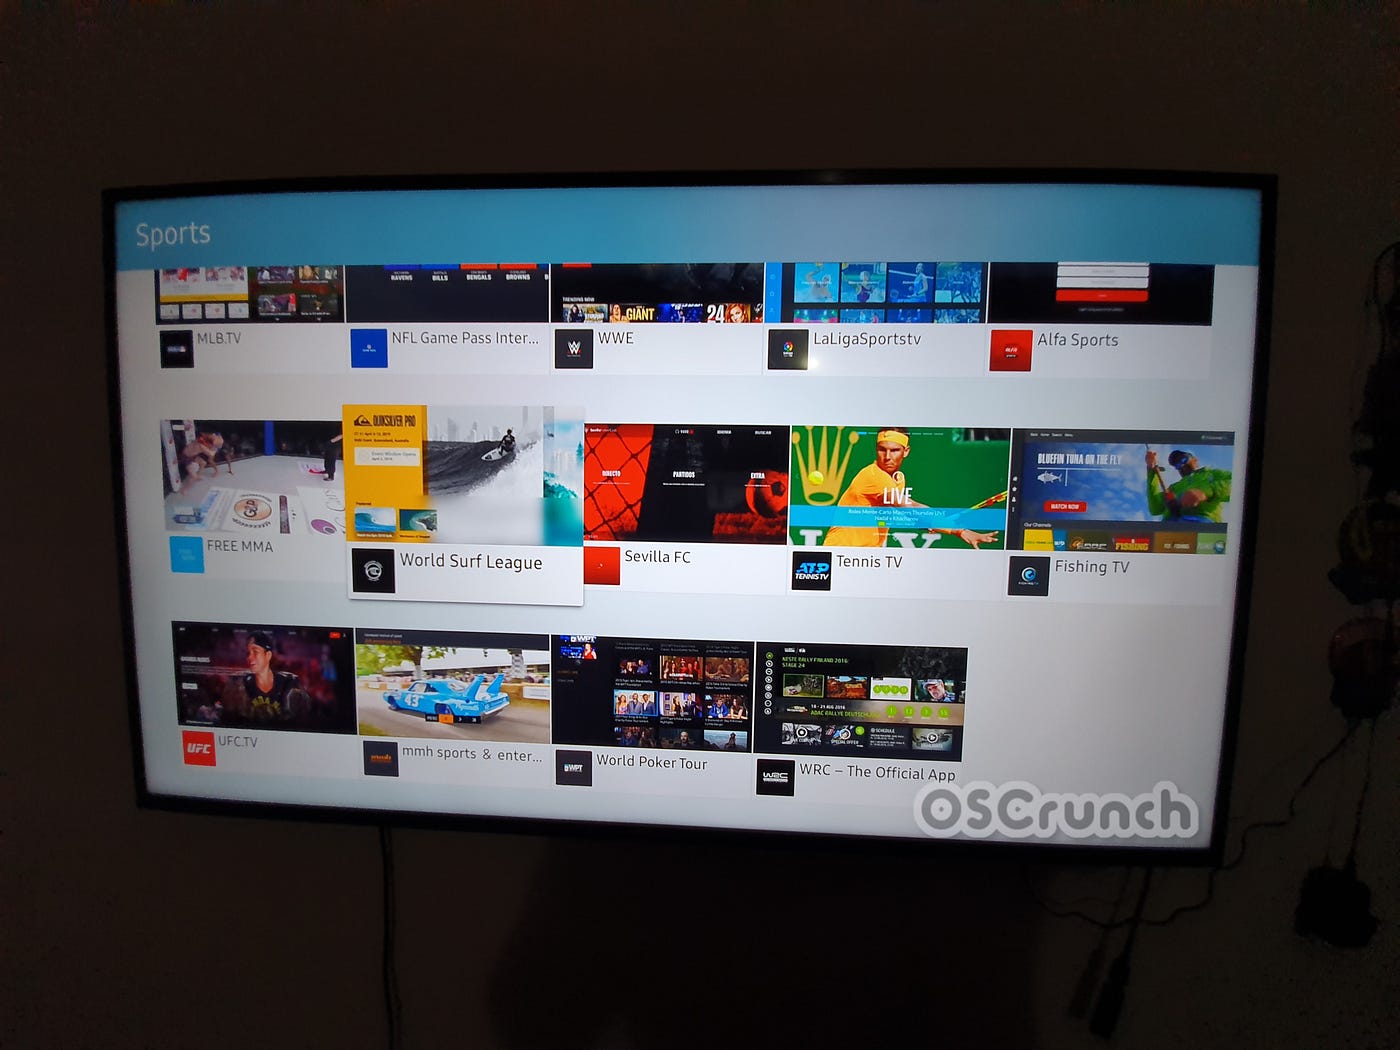 Smart TV, Apps with Smart Hub